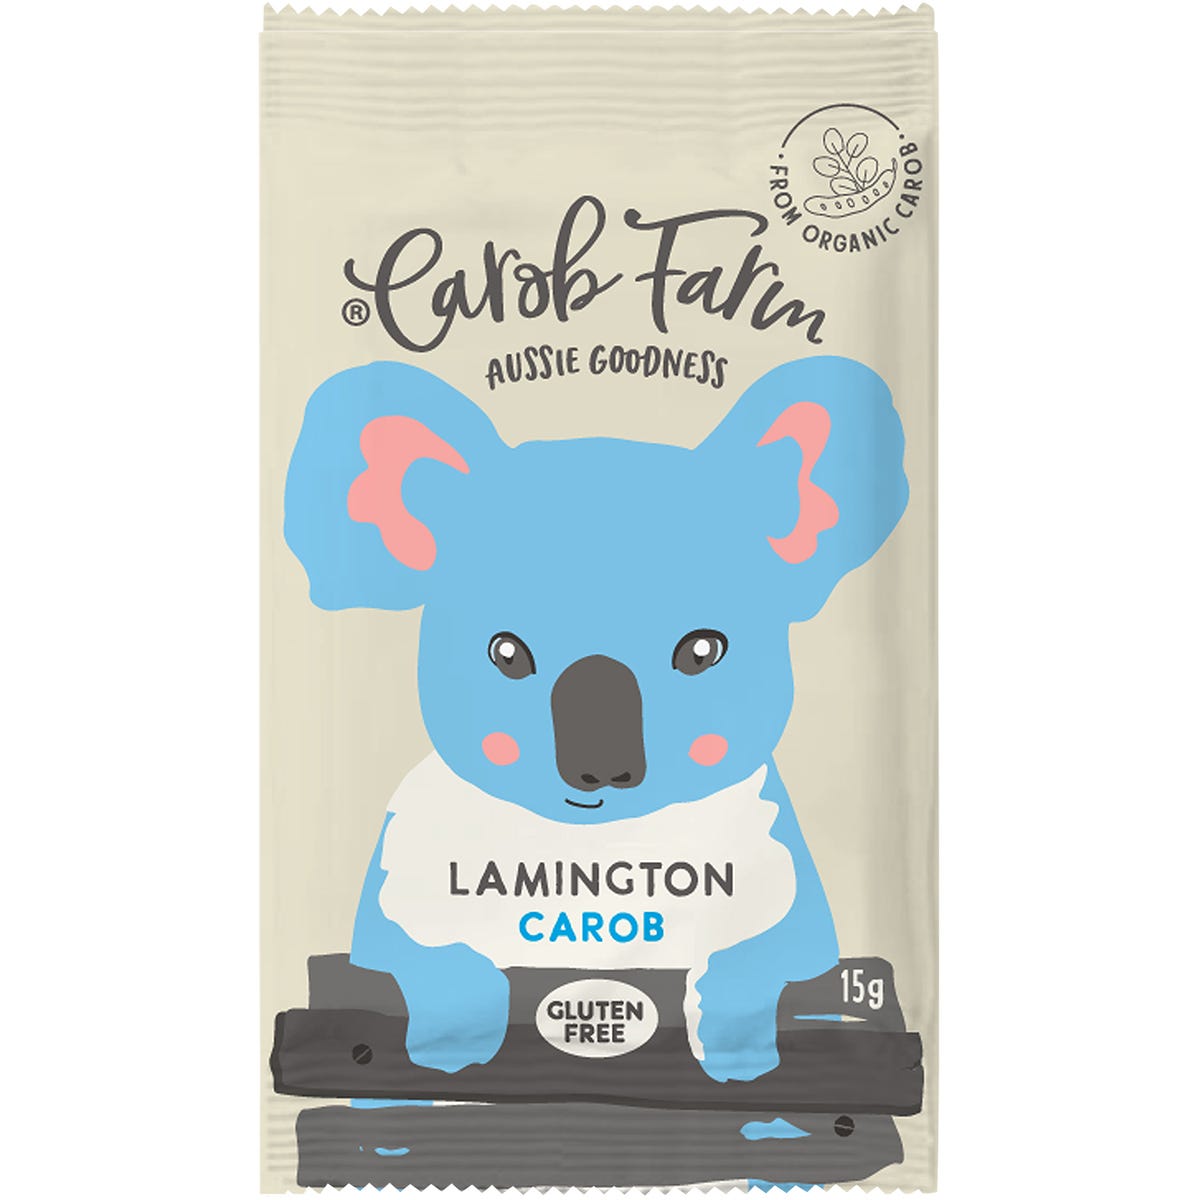 Carob Farm Carob Koala Lamington 15g - Dr Earth - Chocolate & Carob